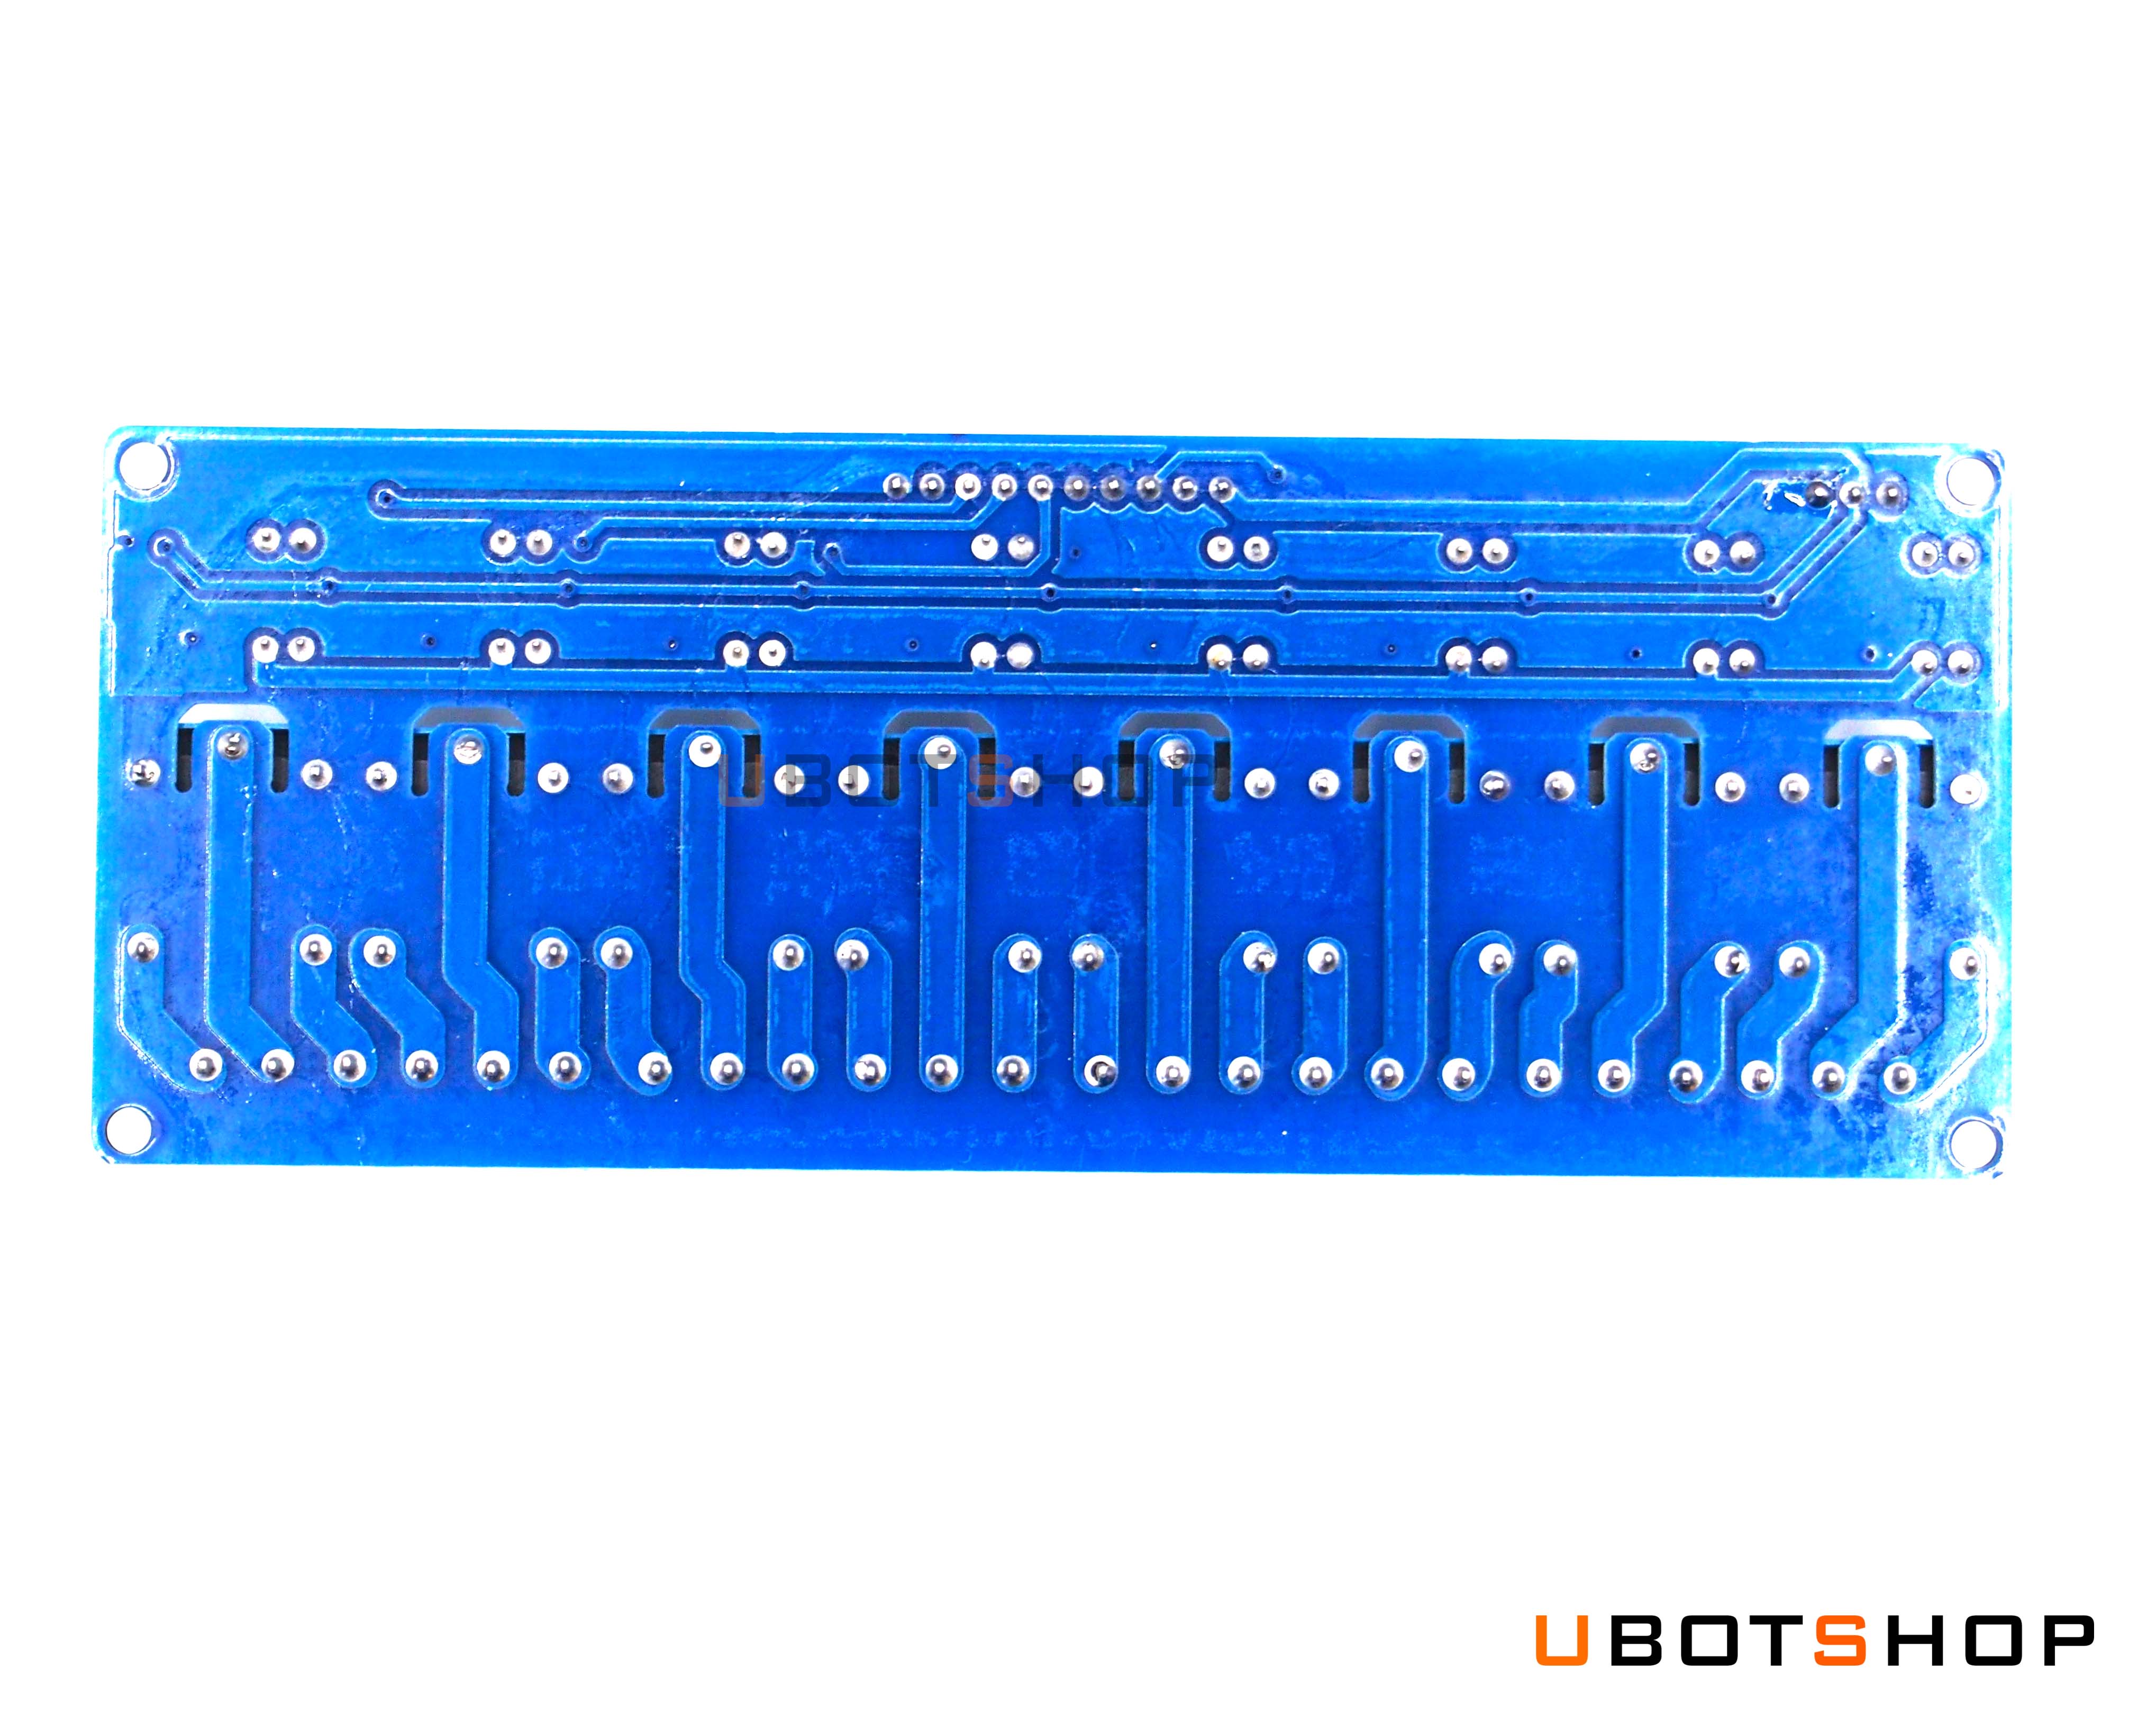 Arduino Module 8 Relays BLUE (SM0020)